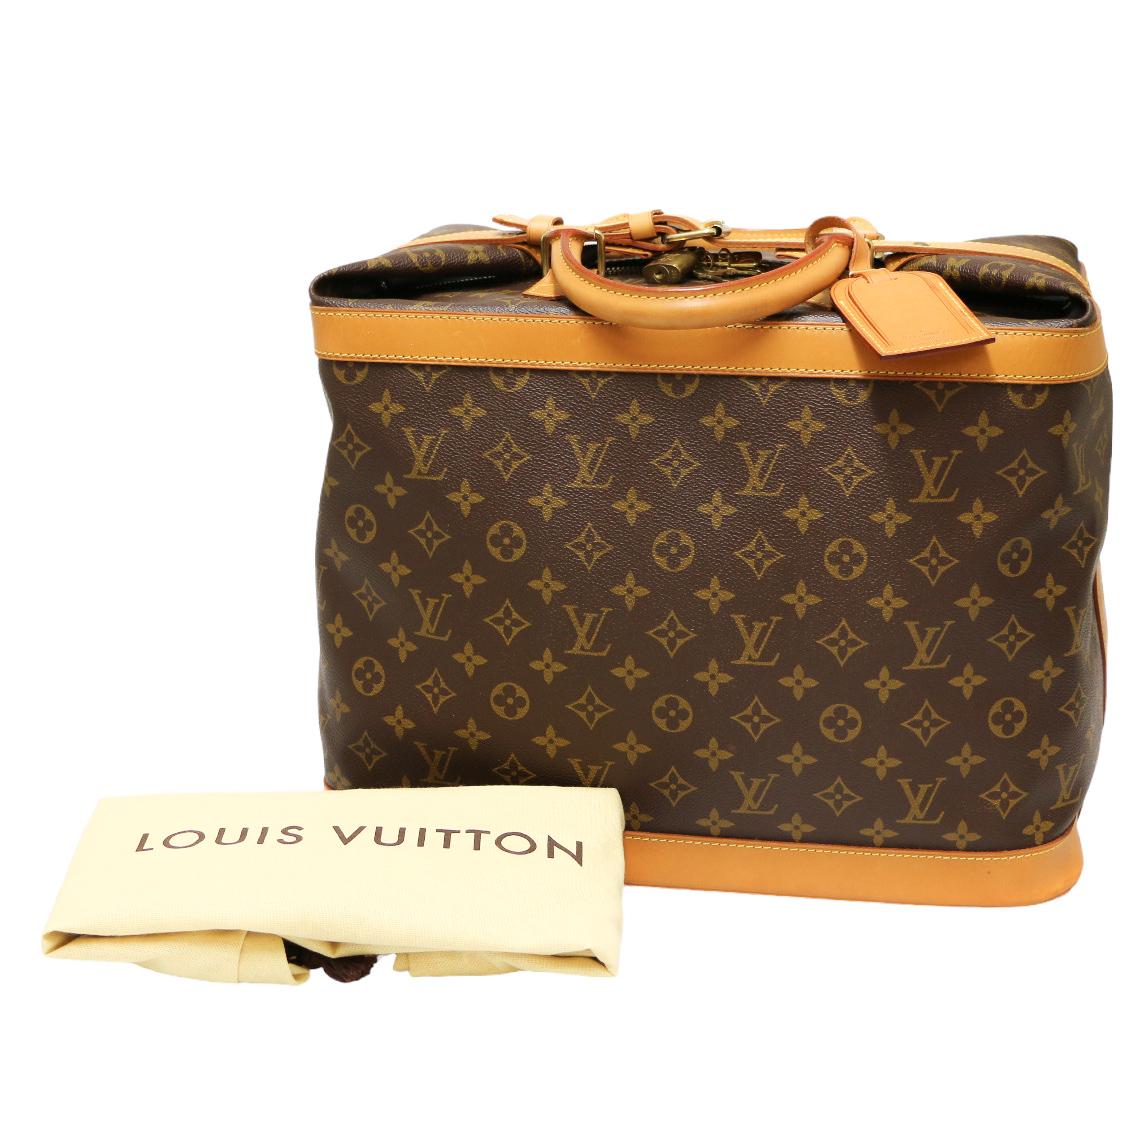 Vintage Louis Vuitton Cruiser Bag For Sale 6